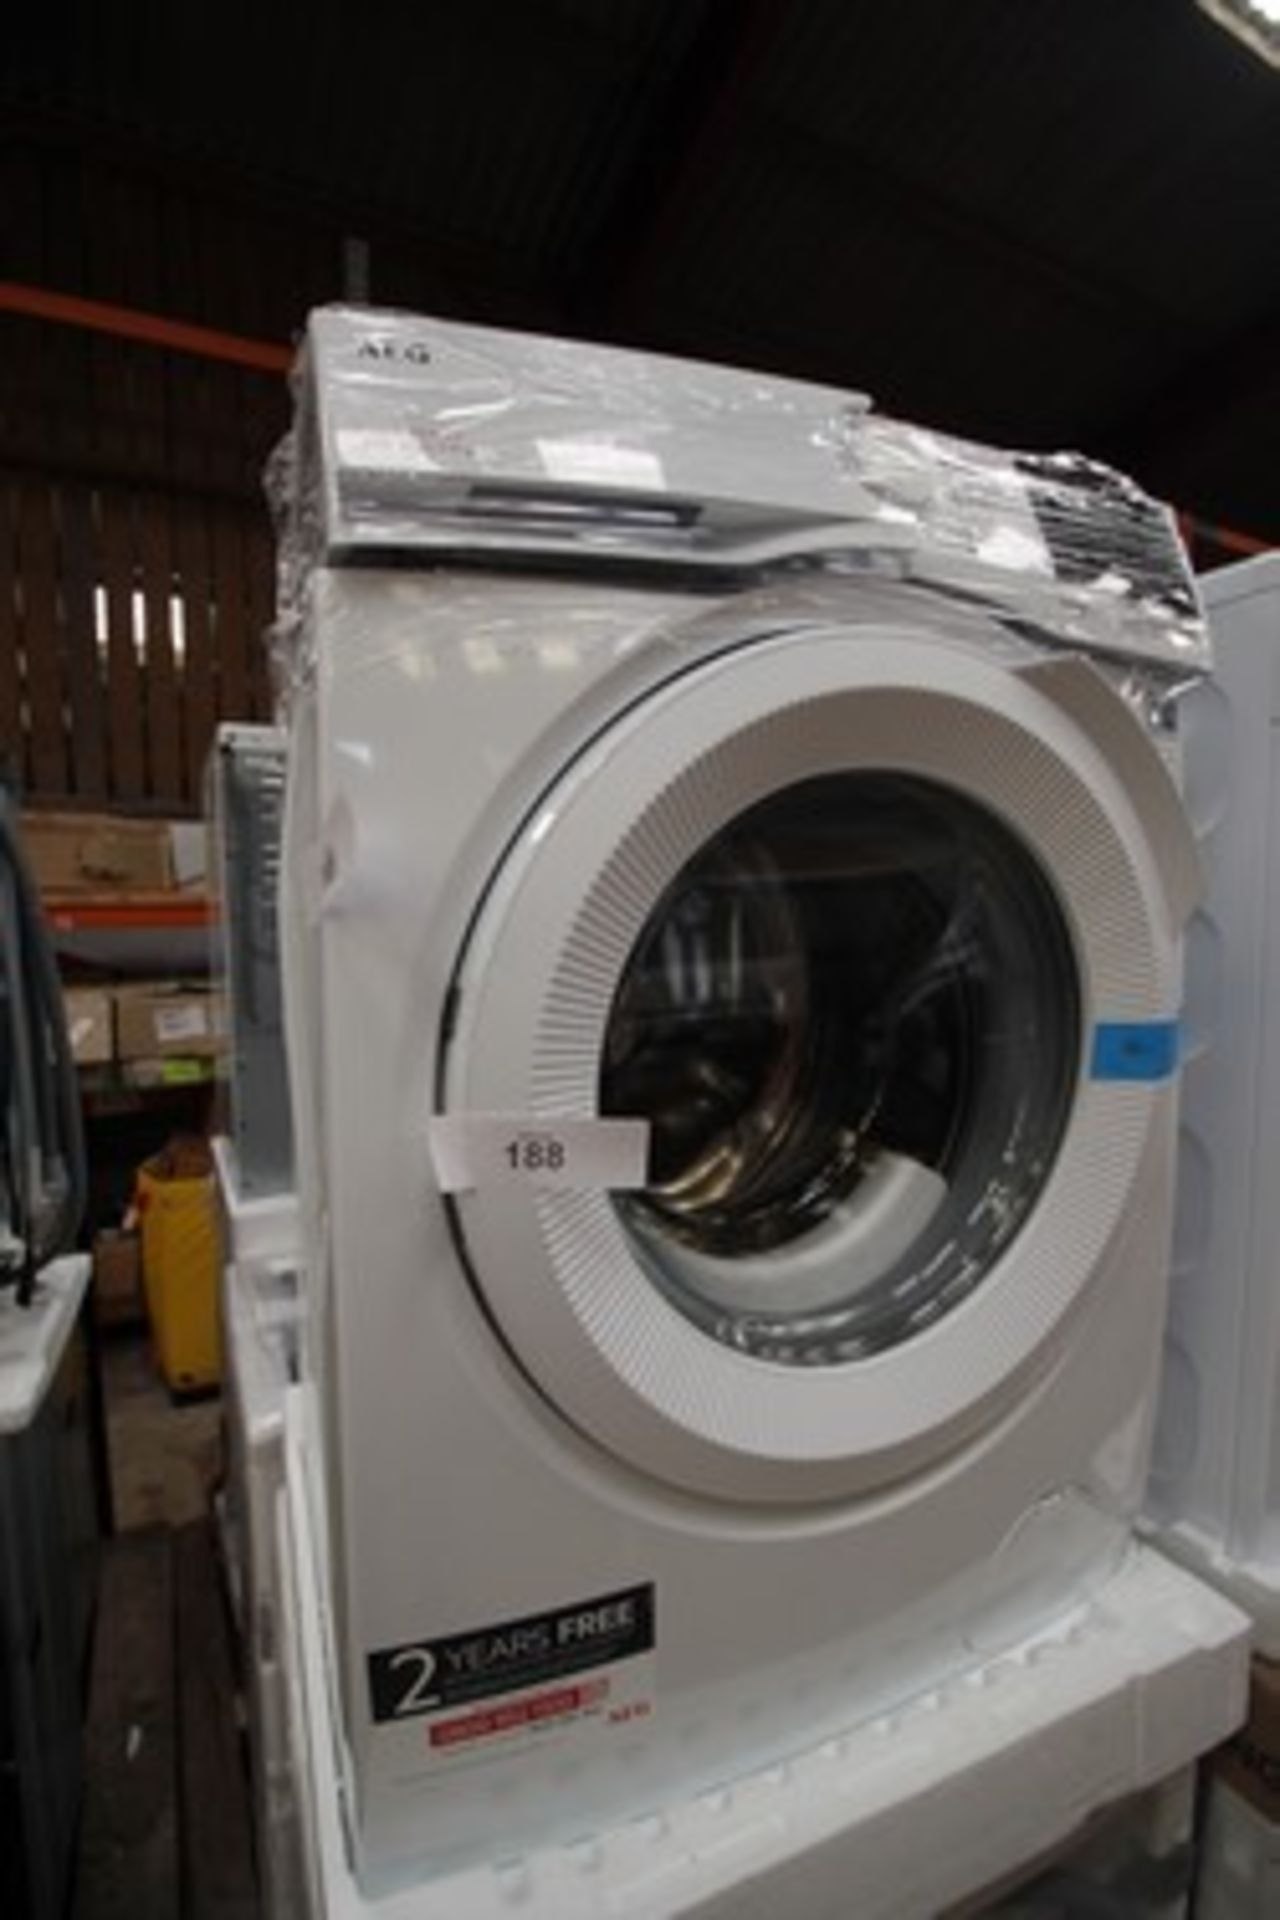 1 x AEG 8kg washing machine, Model 914913125, loose top panel, damaged control panel and dented